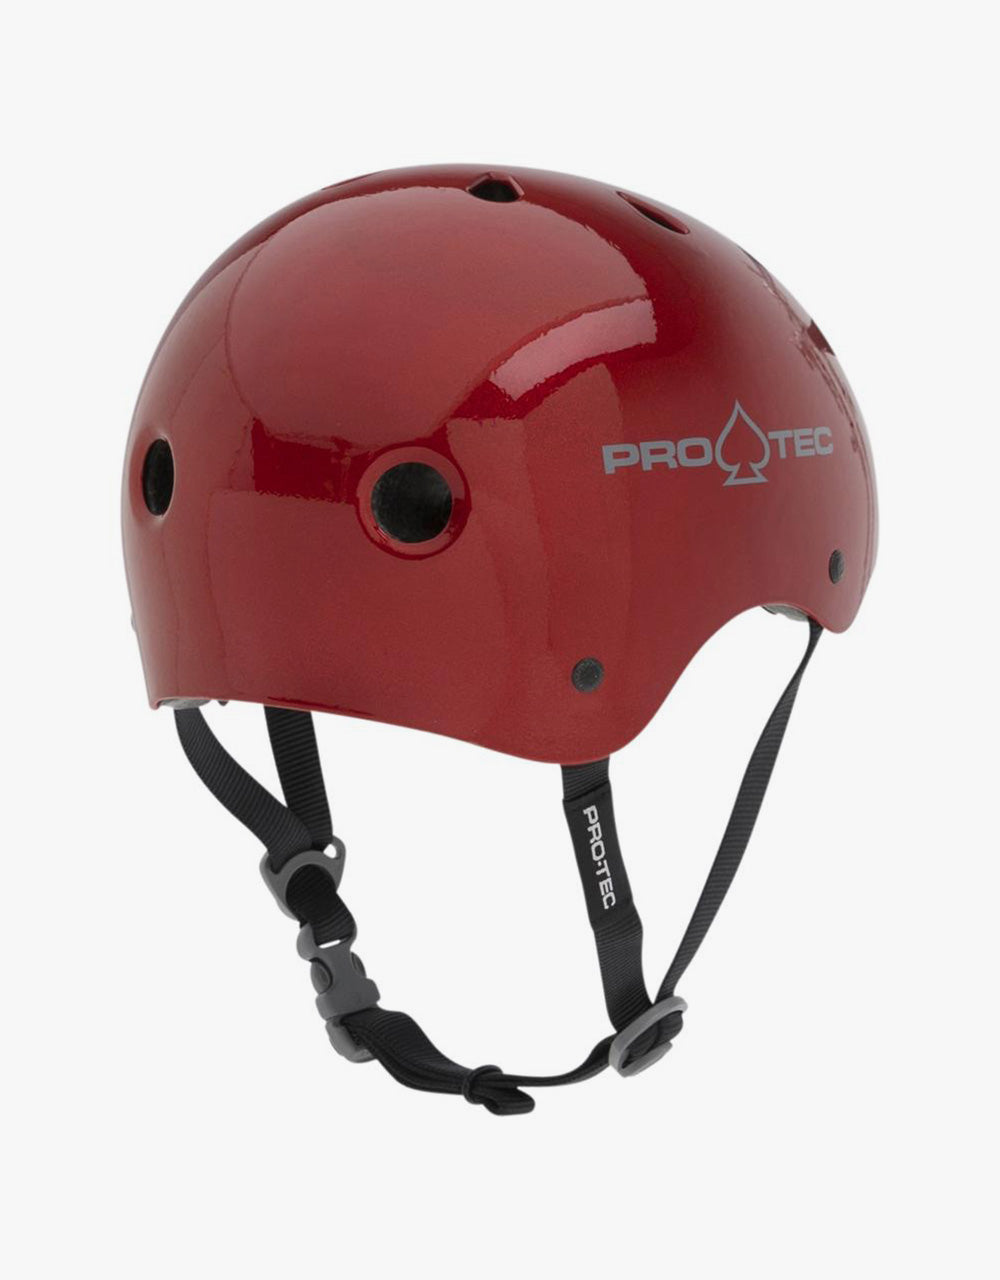 Pro Tec Classic Helmet - Red Metal Flake